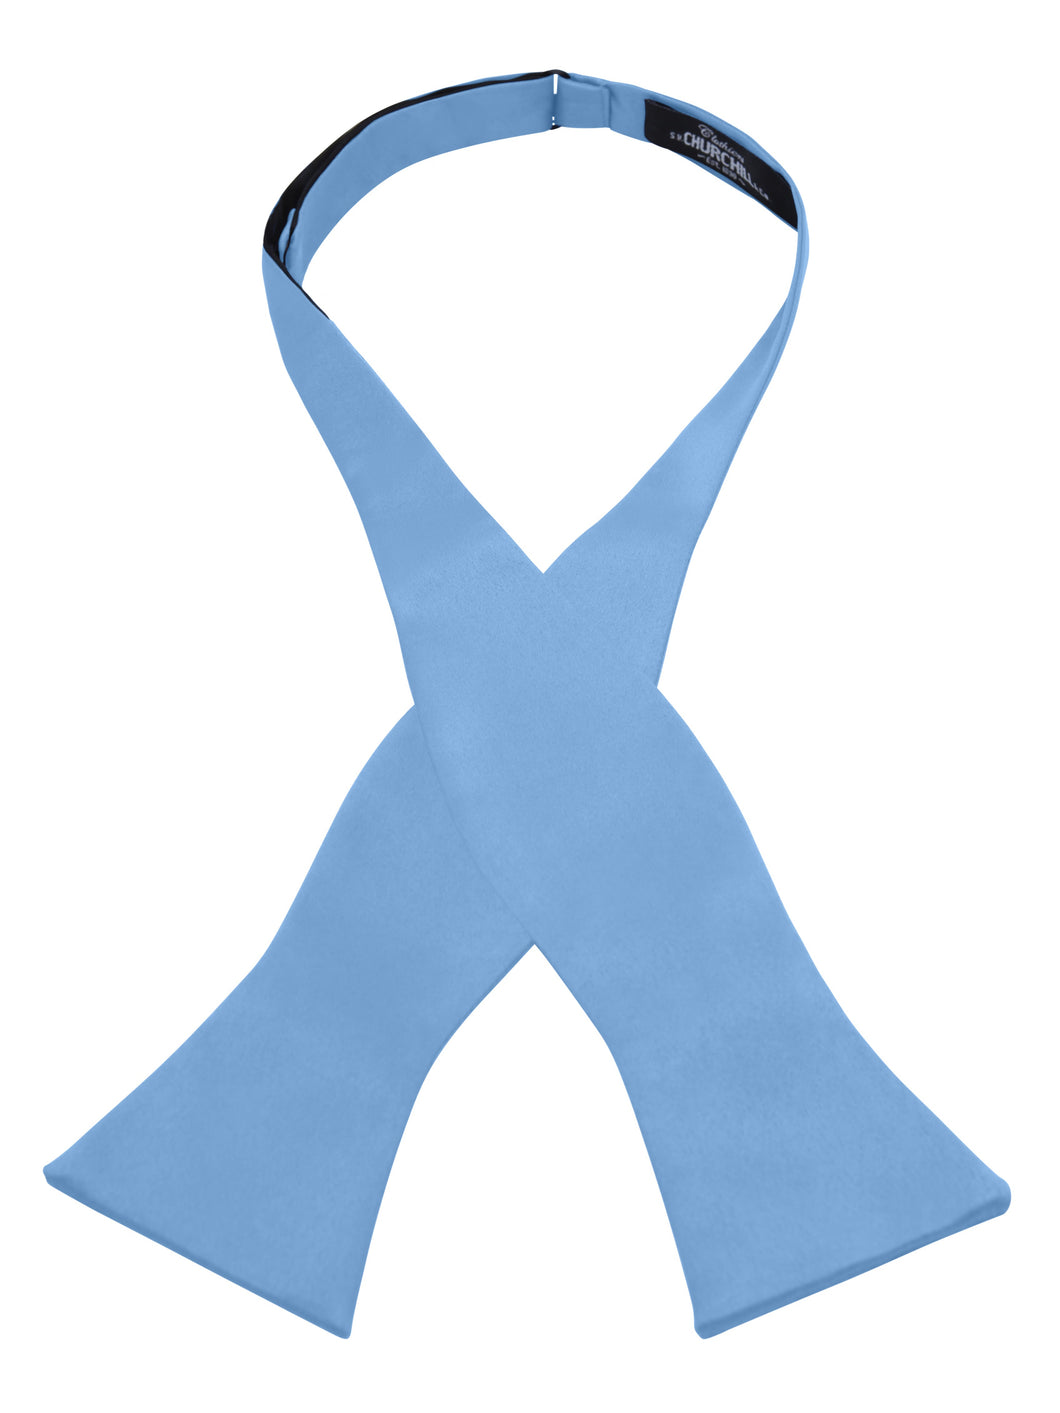 S.H. Churchill & Co. Men's Light Blue Self-Tie Satin Bow Tie